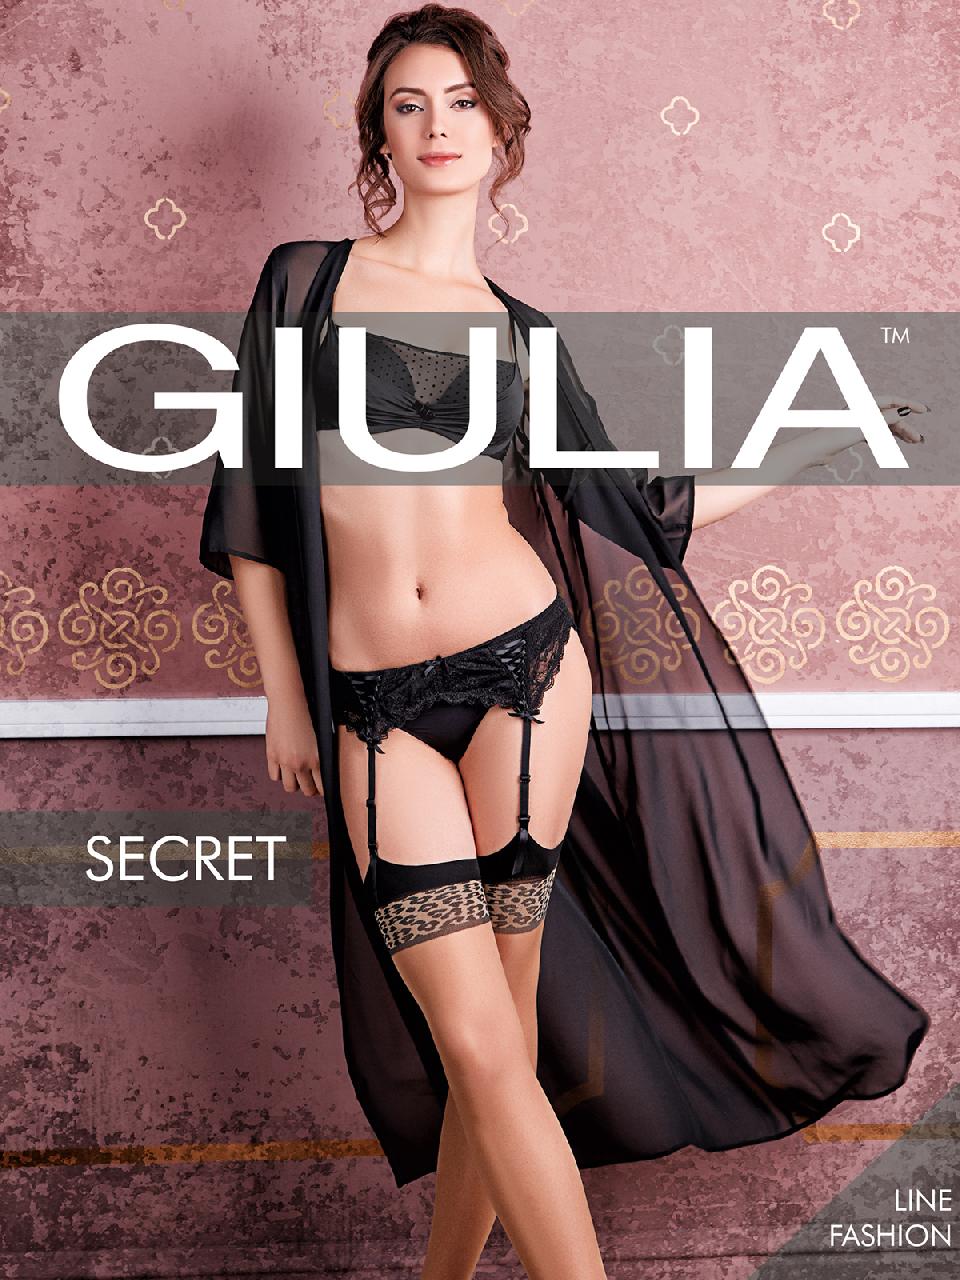 Giulia Secret 08 /чулки/ daino 3/4